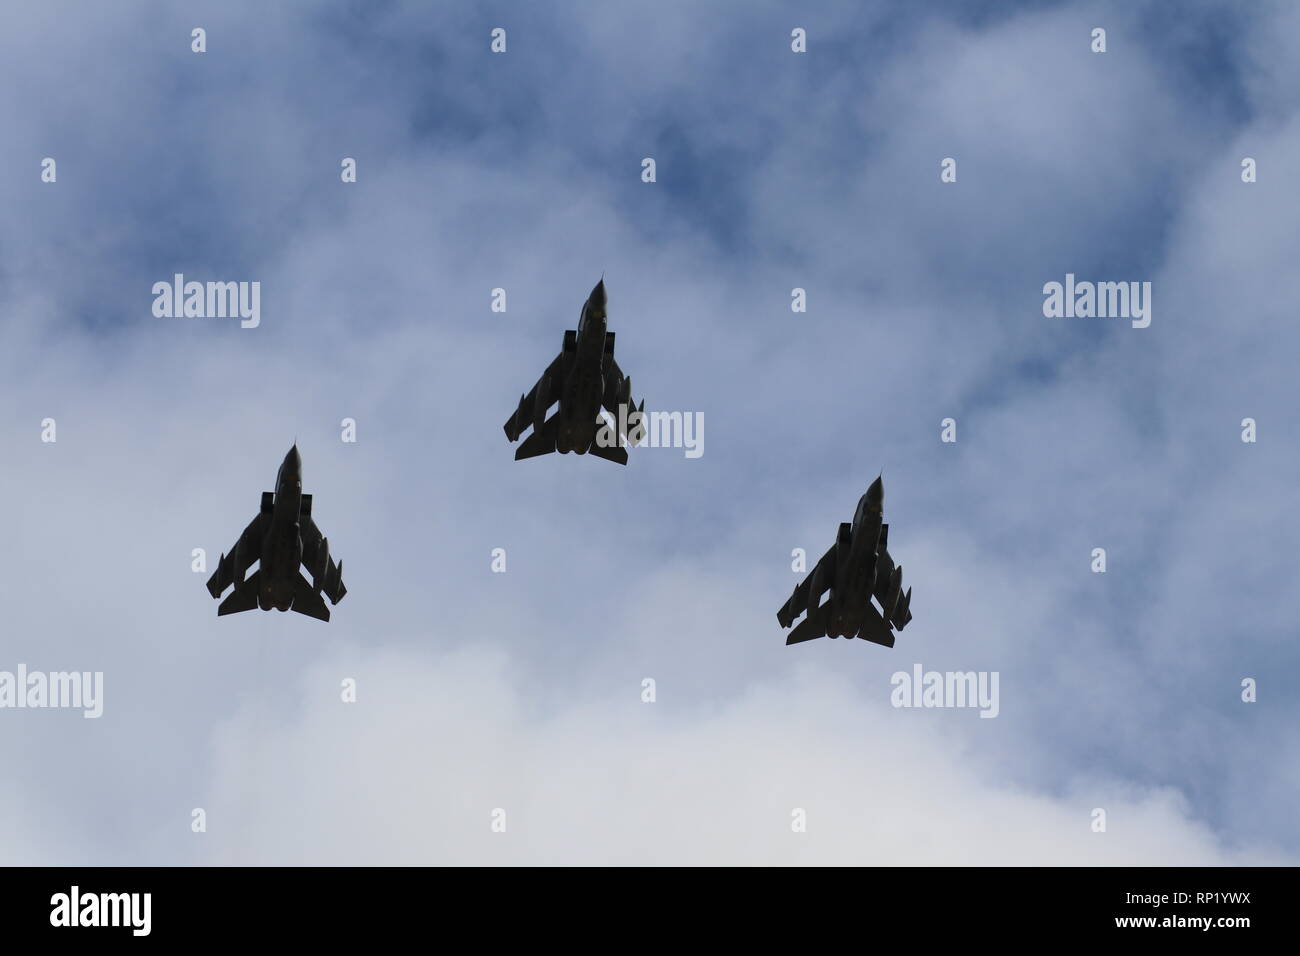 RAF Tornado flypast over Duxford IWM in Cambridgeshire, England Stock Photo